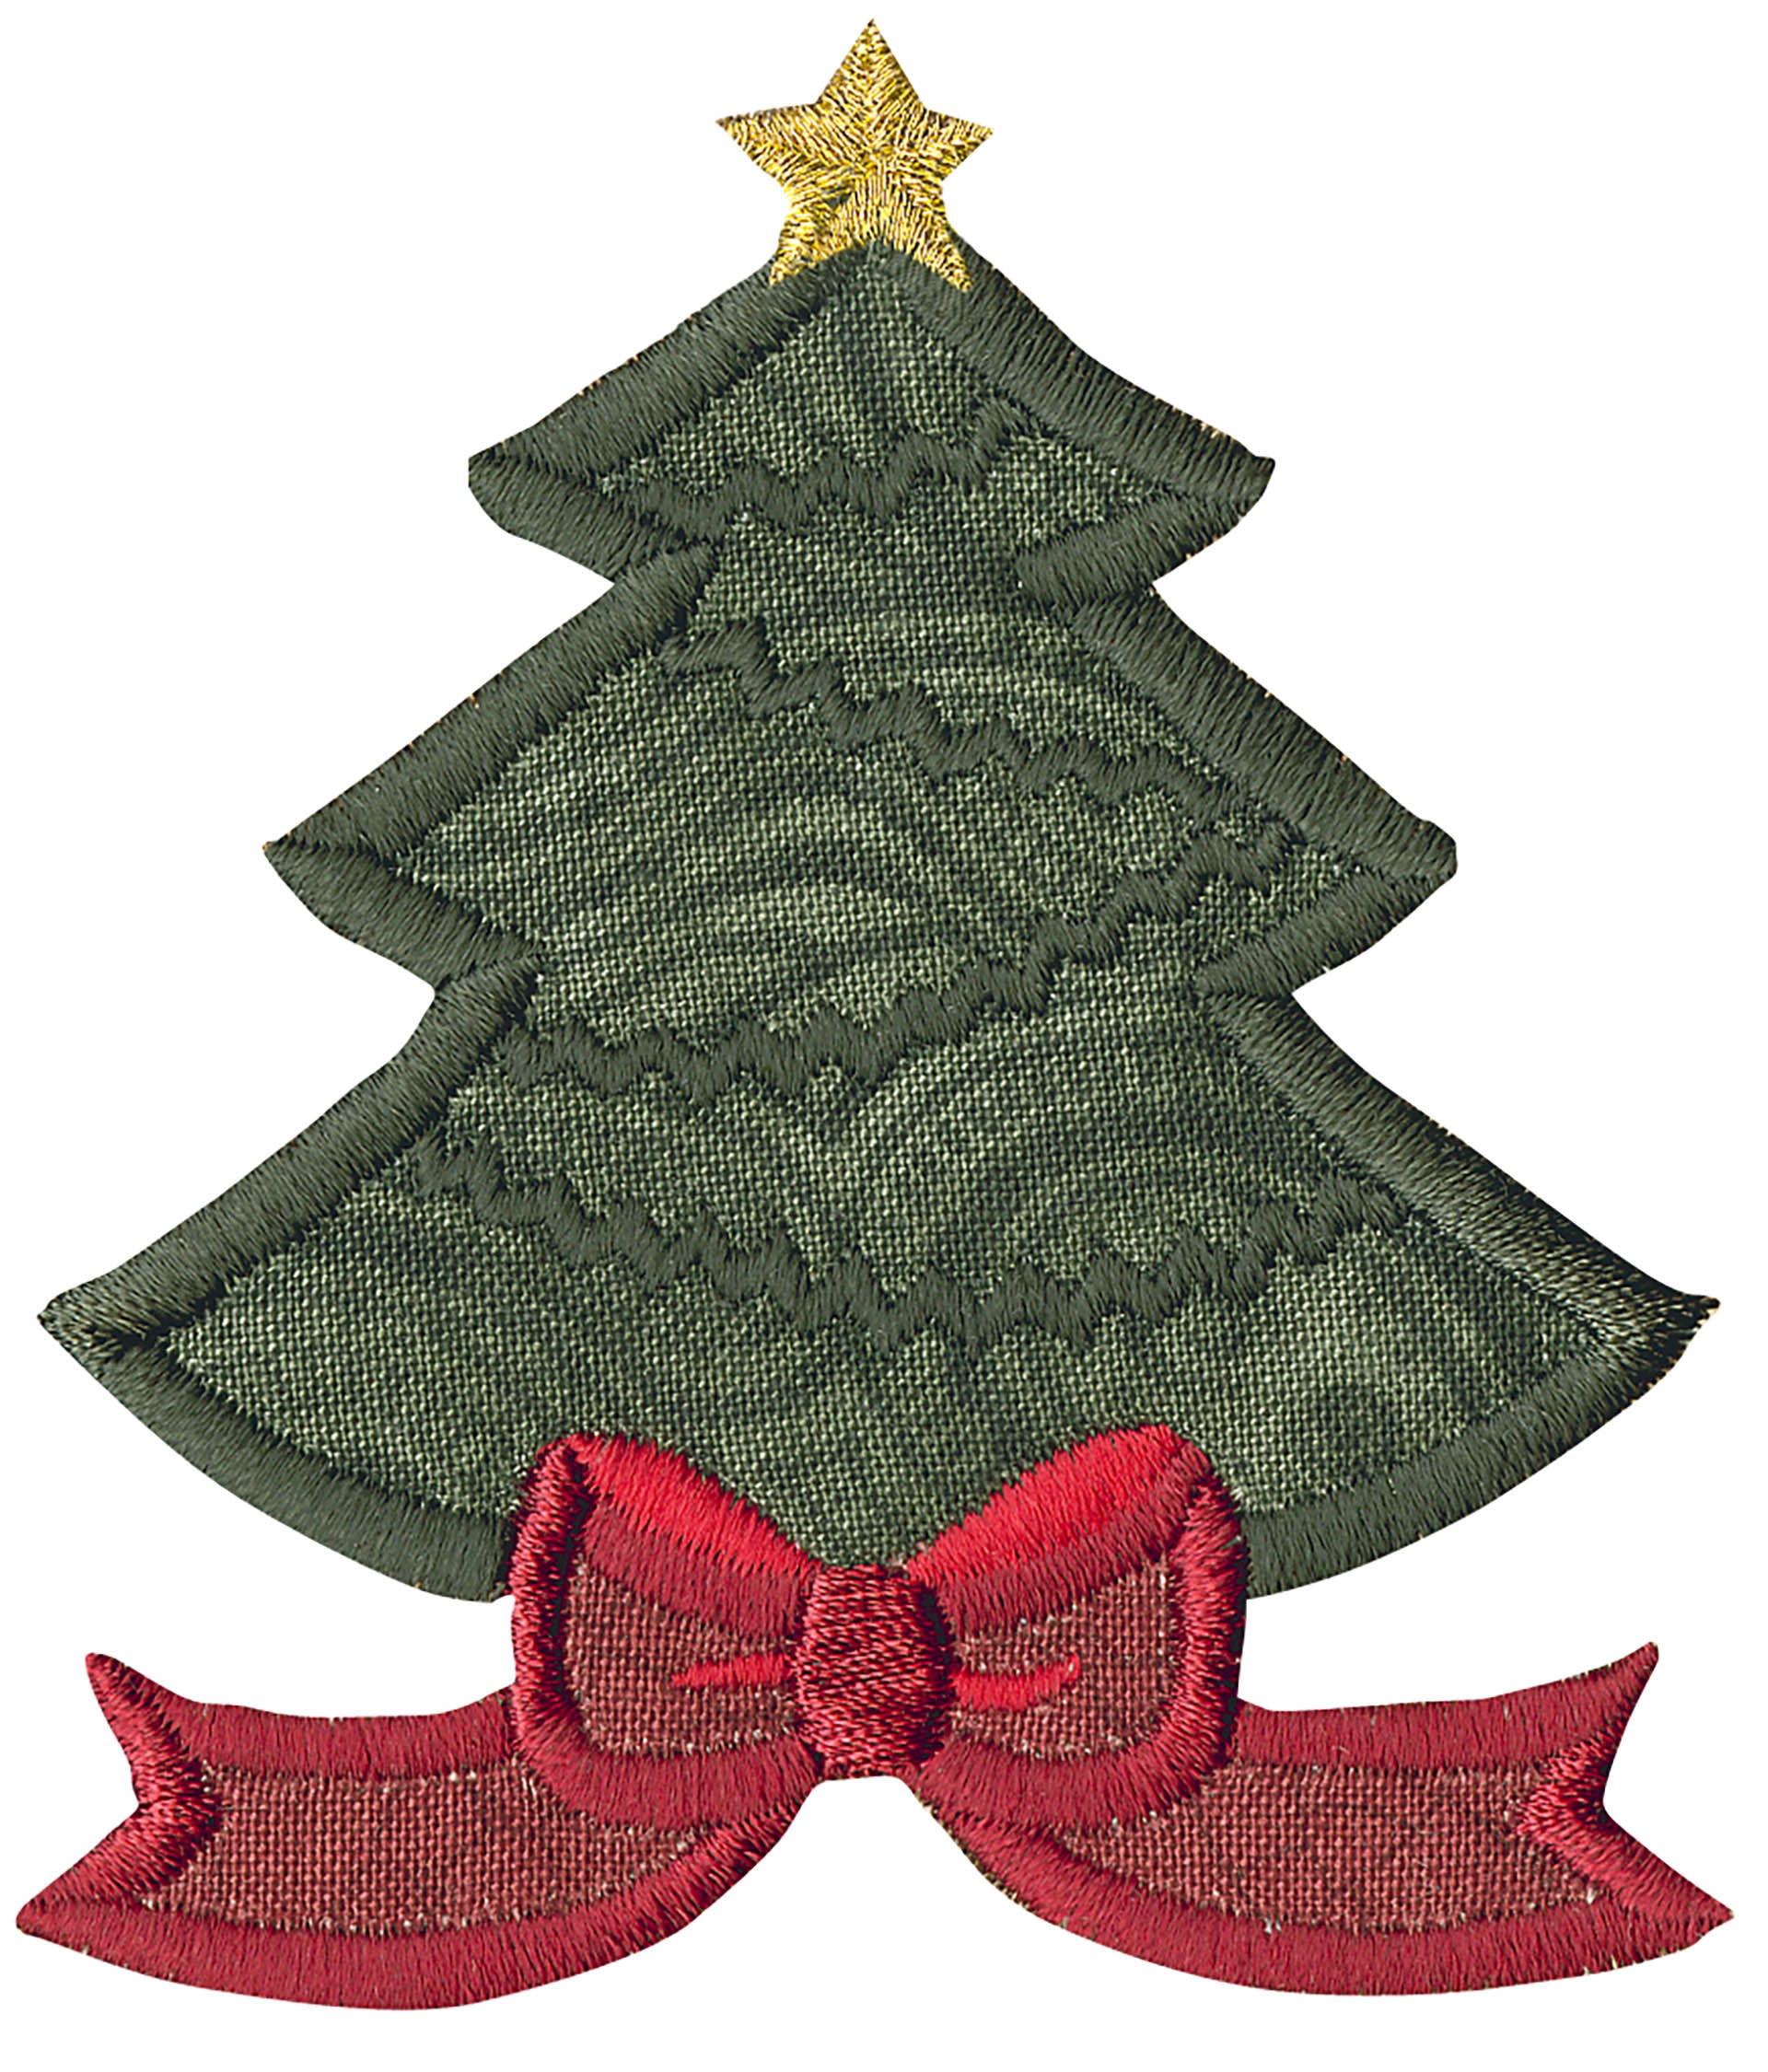 Christmas Quilt Labels — Anita Goodesign